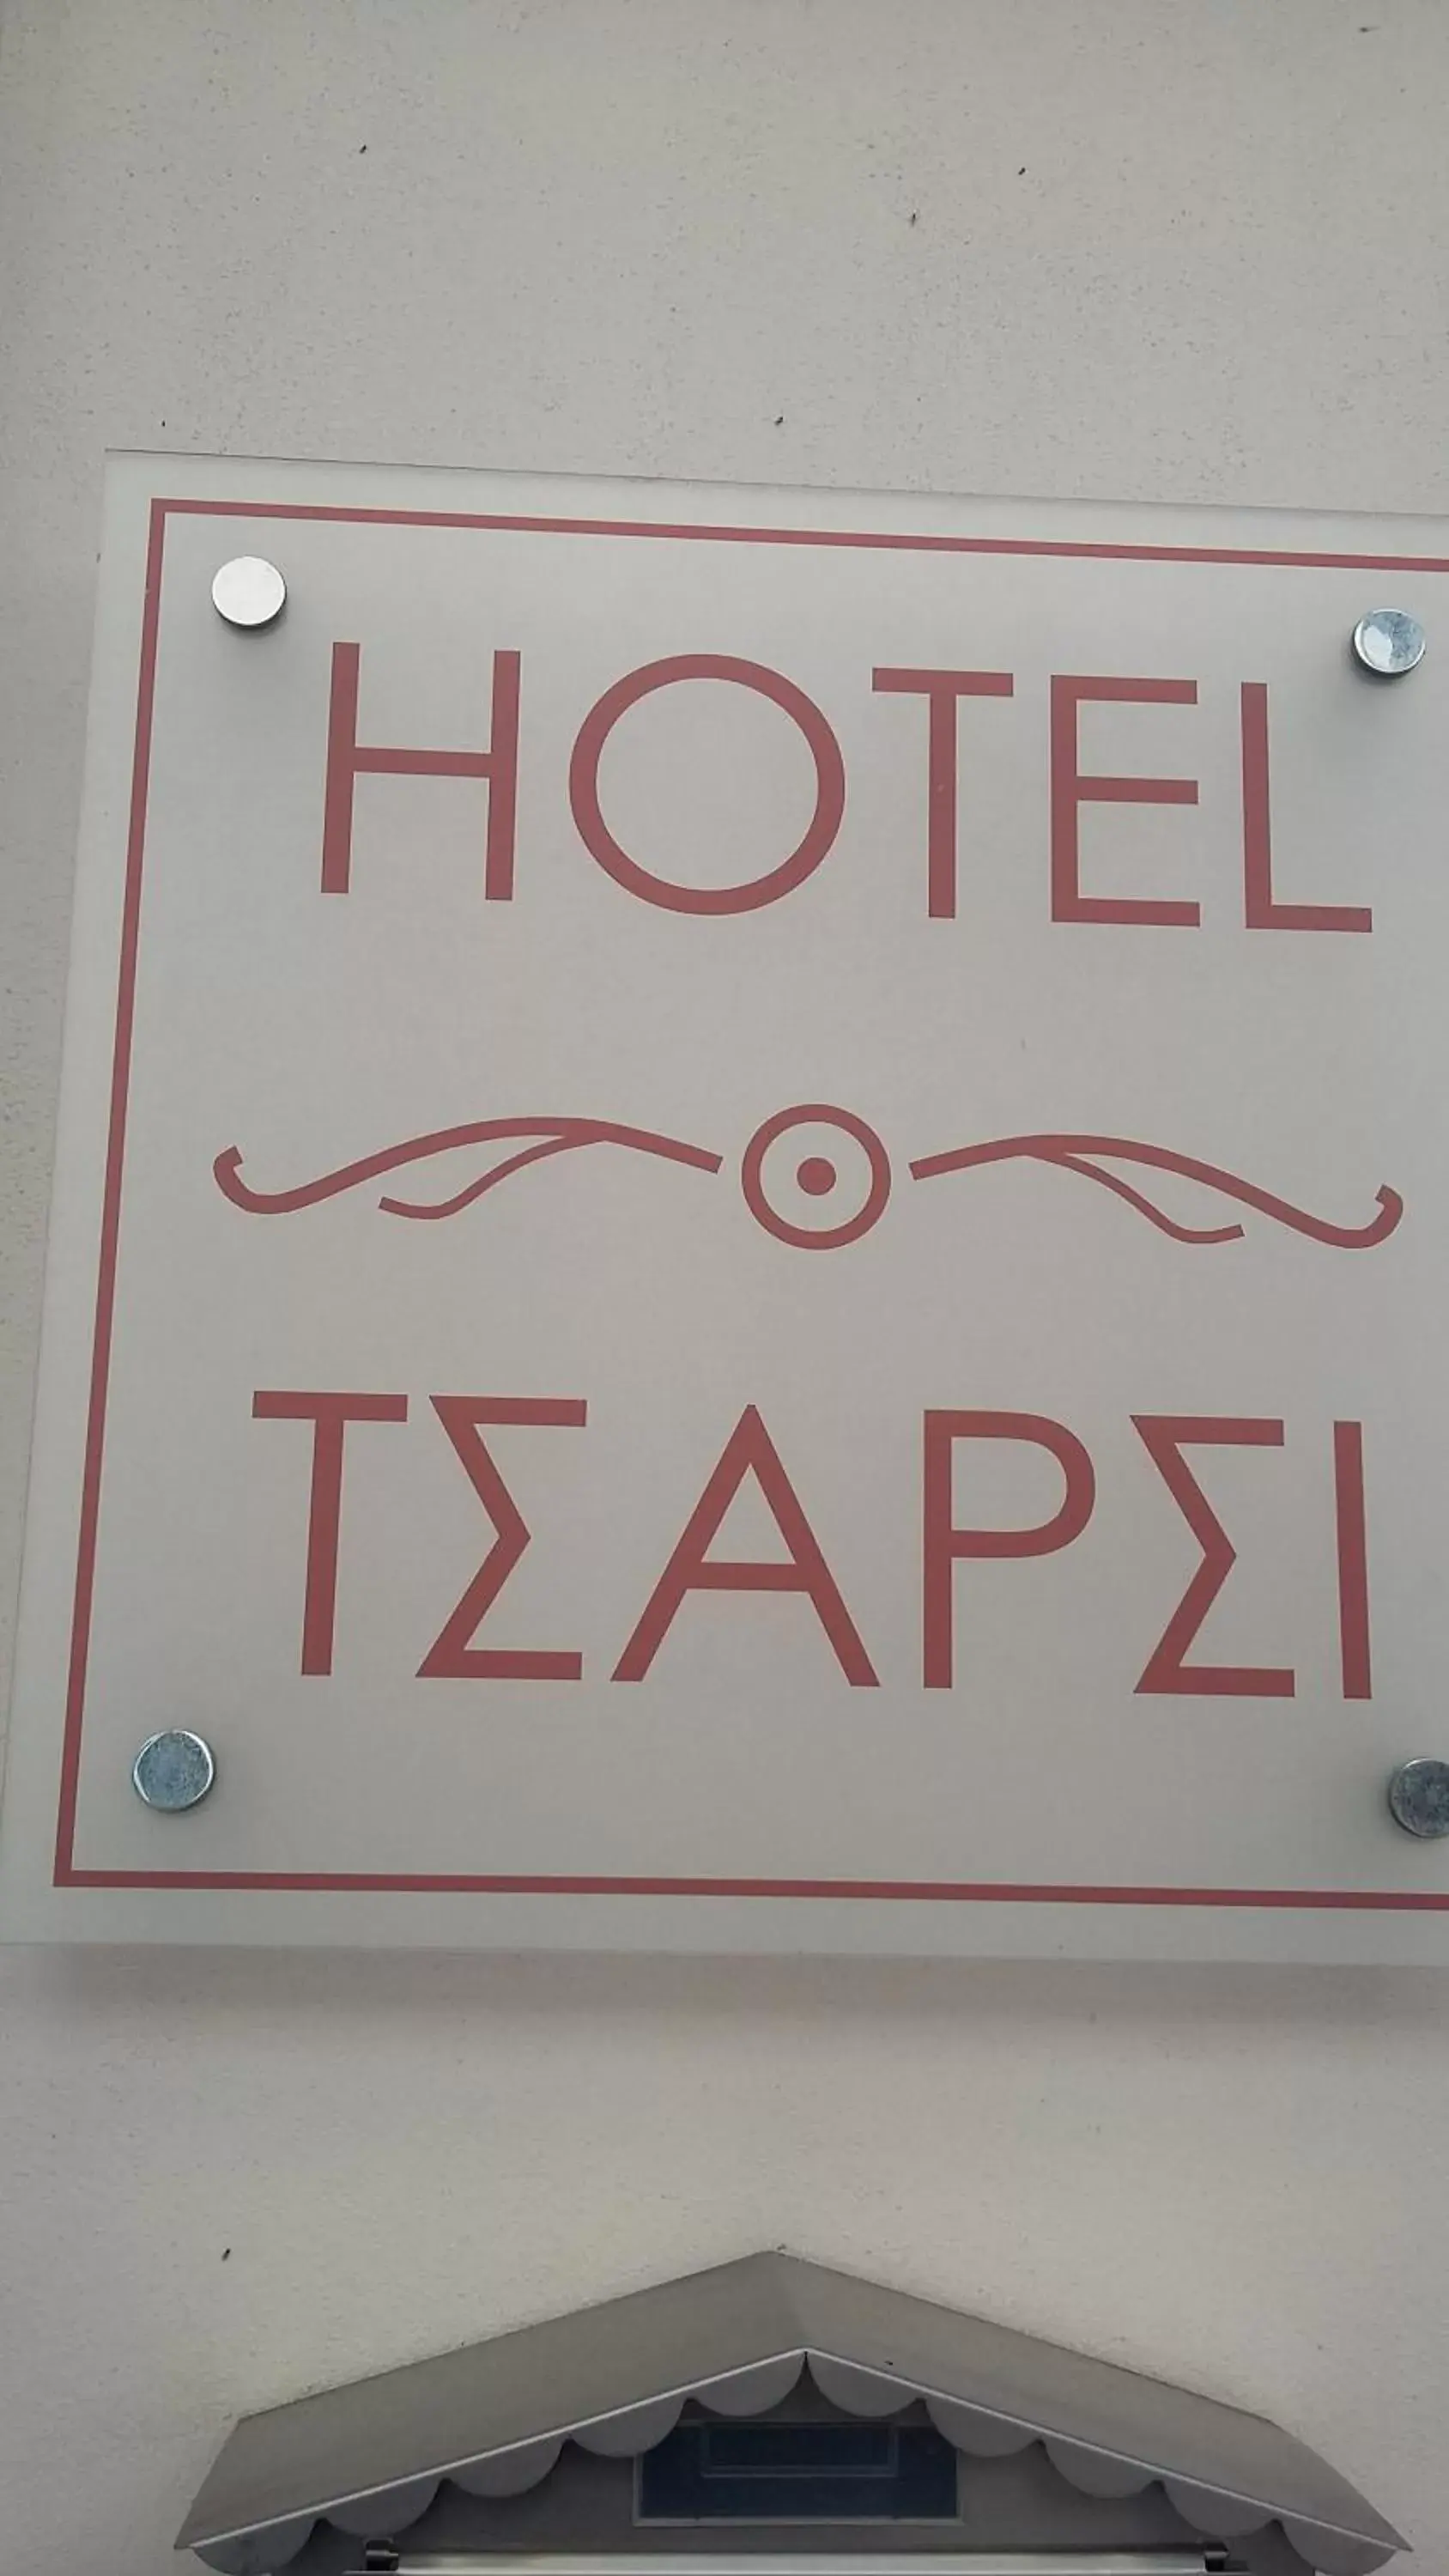 Property logo or sign in HOTEL TSARSI